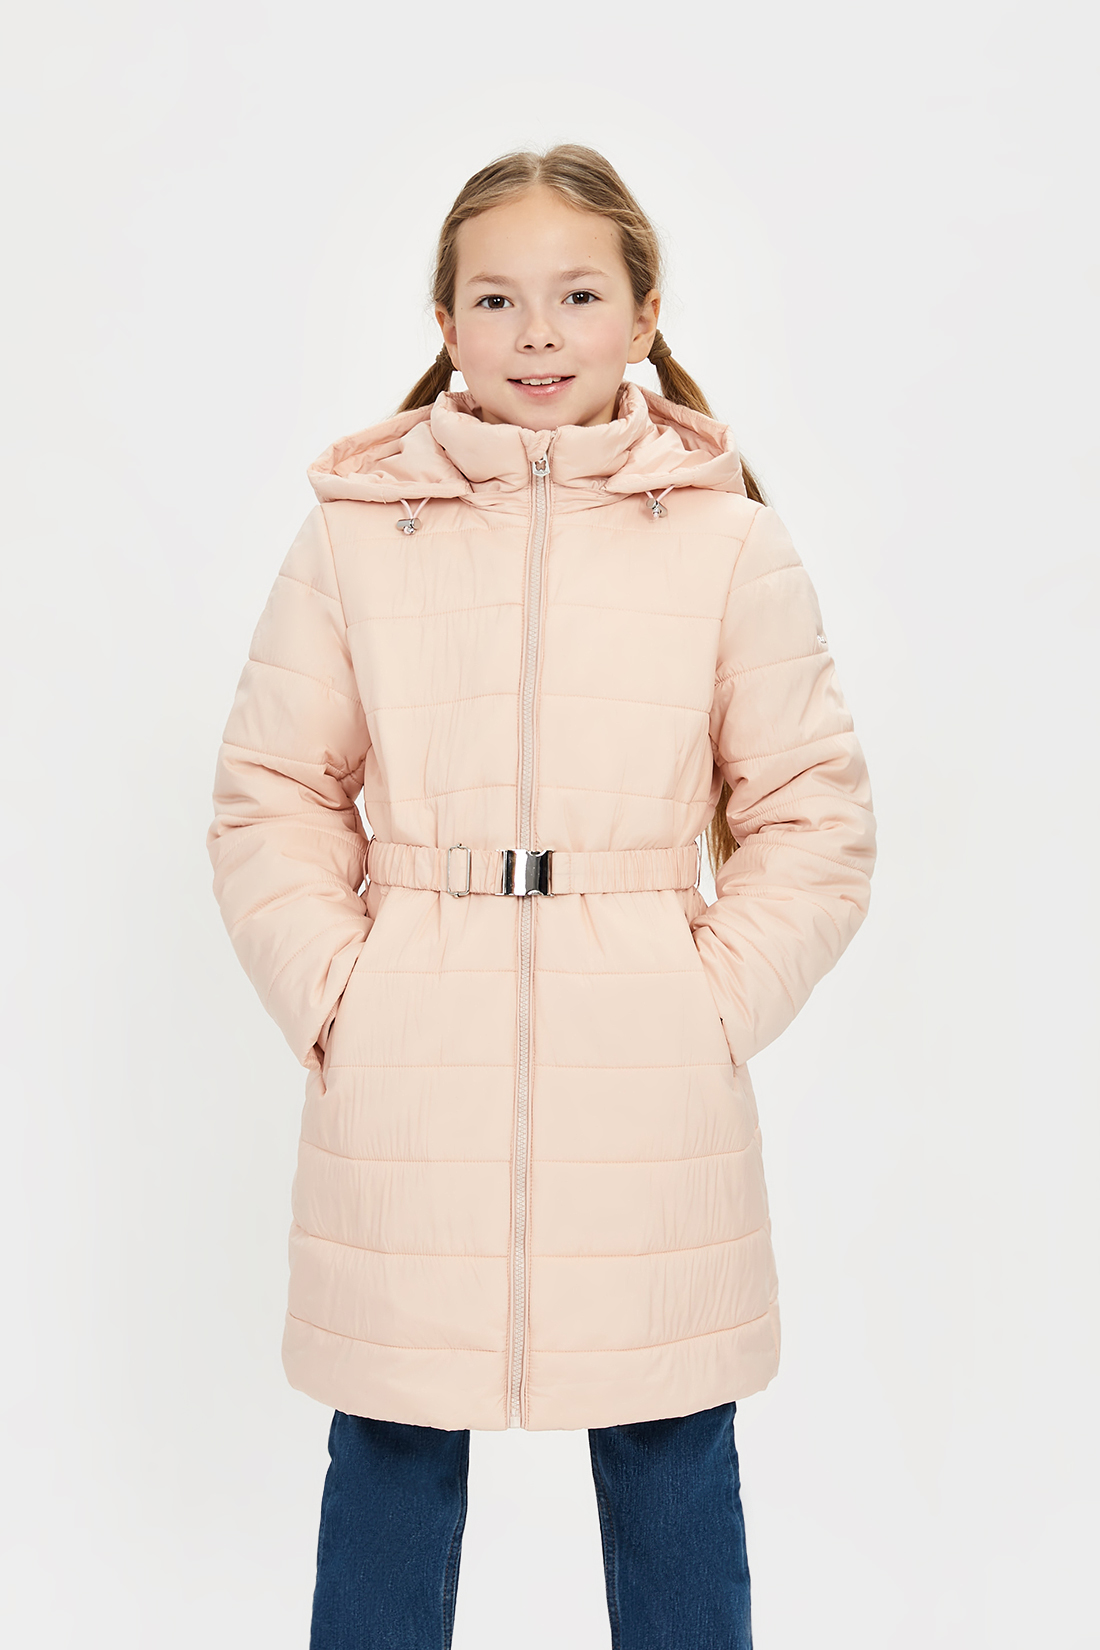 Куртка для девочки Baon BK031004 цв. розовый р.140